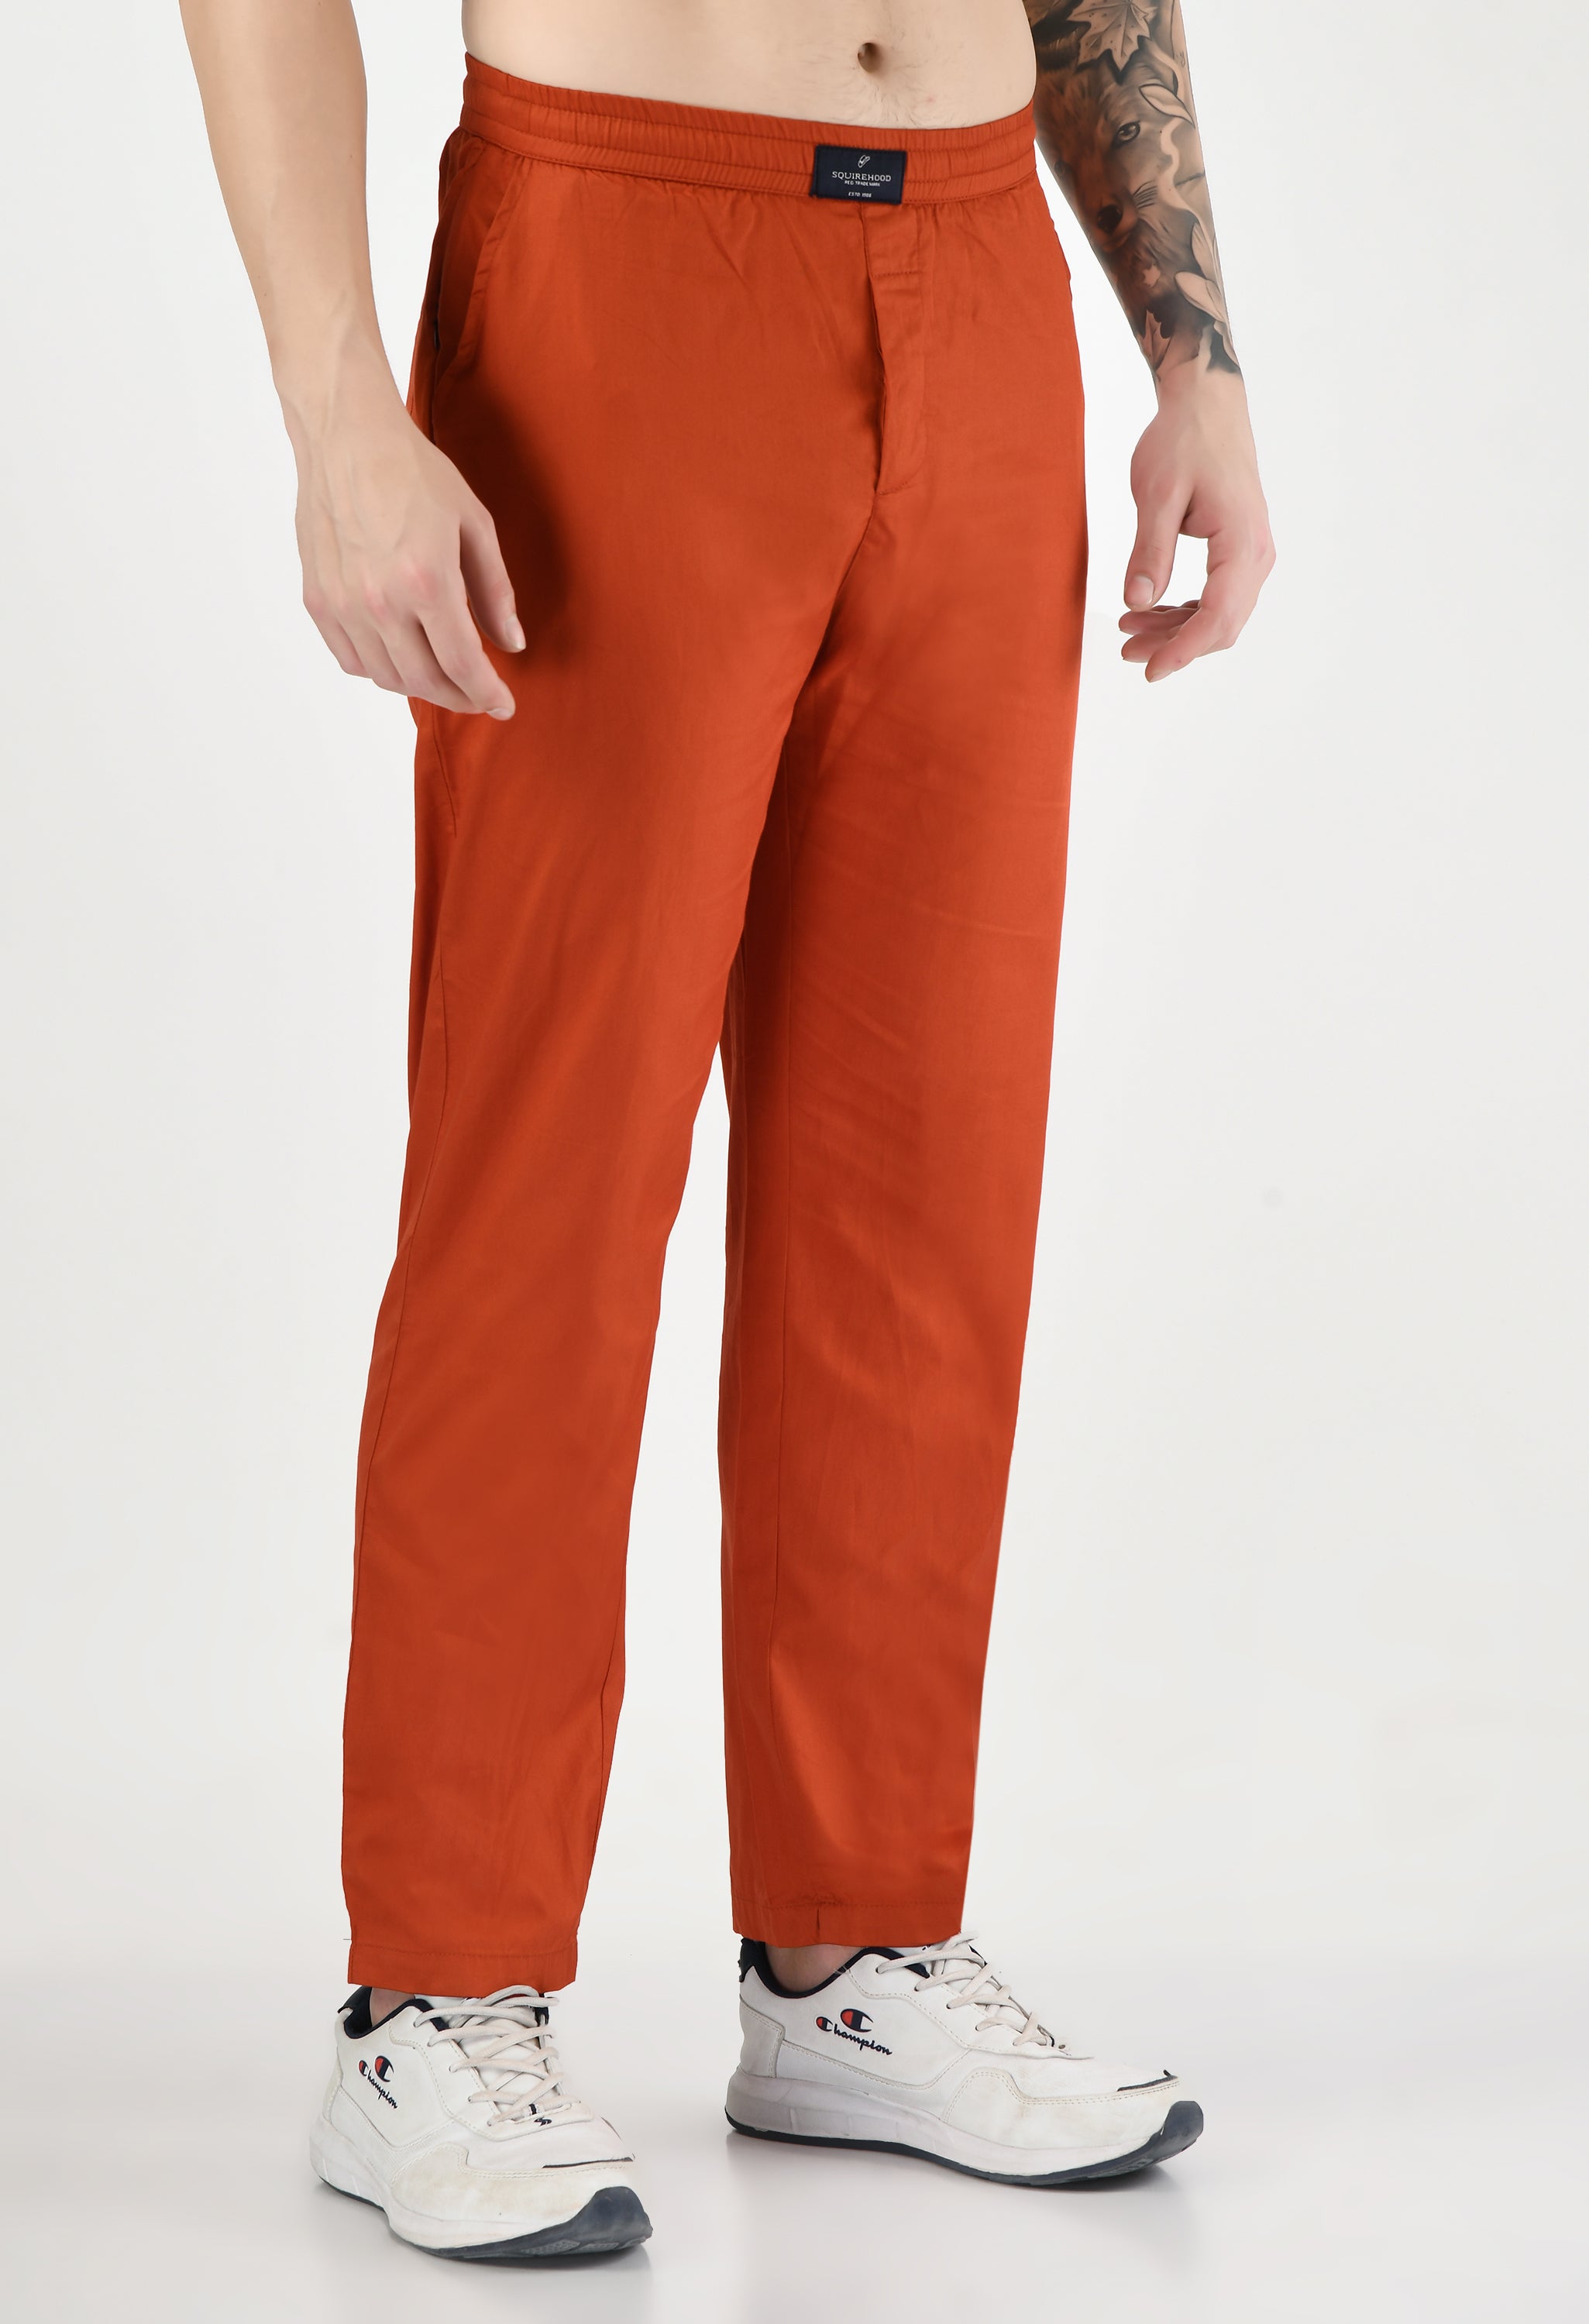 Orange Solid Cotton Twill Men's Trouser